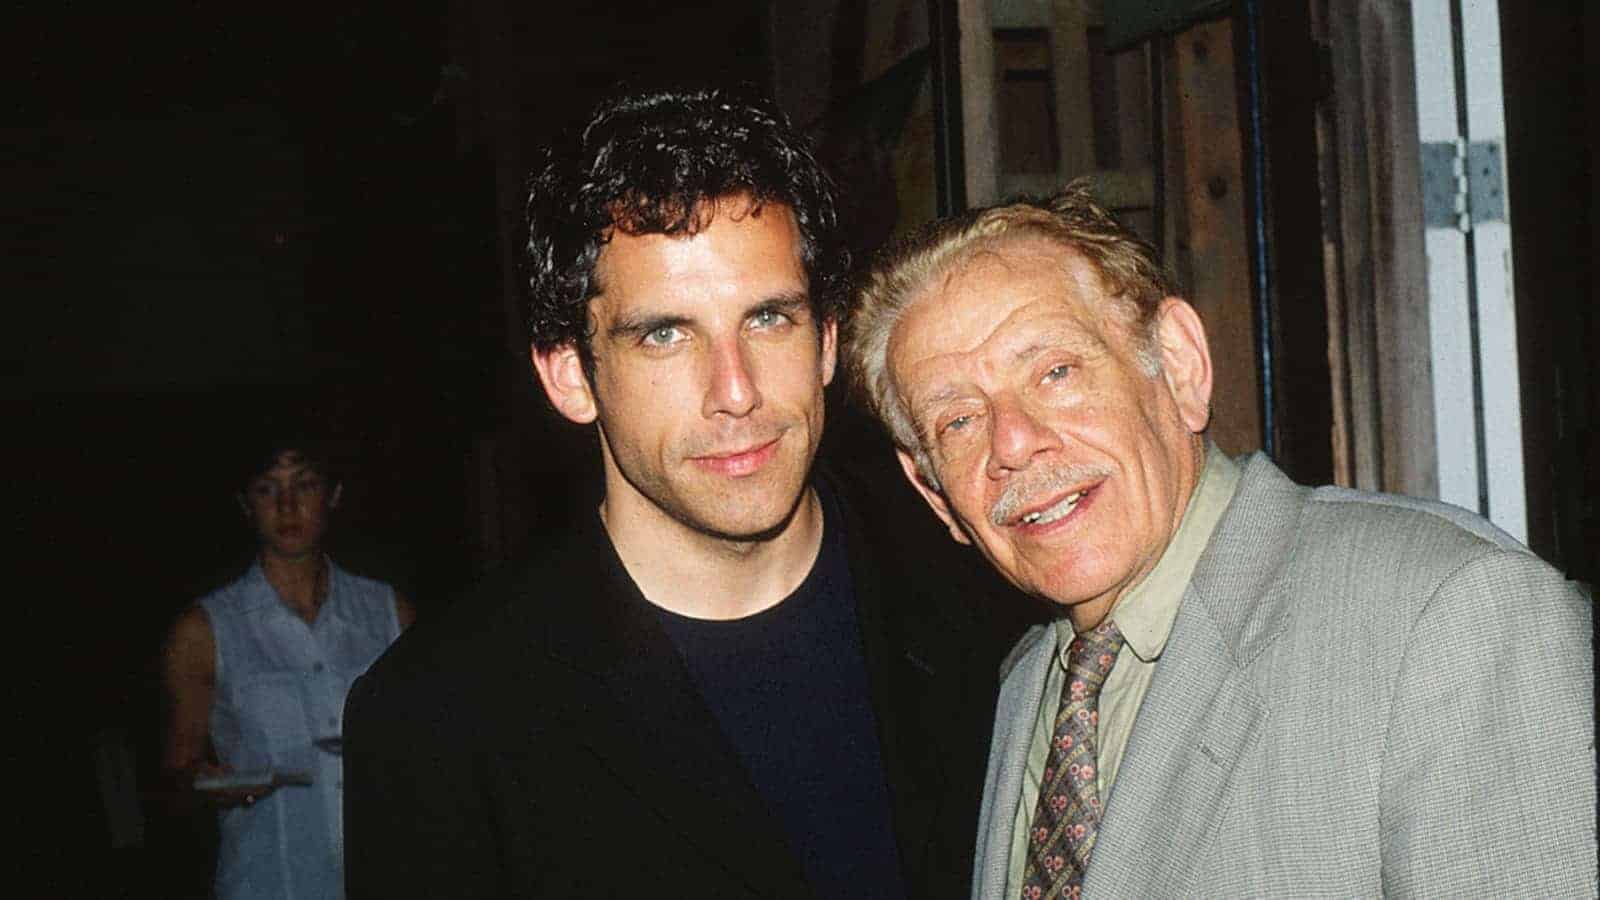 Image of Ben Stiller with his father, Jerry Stiller